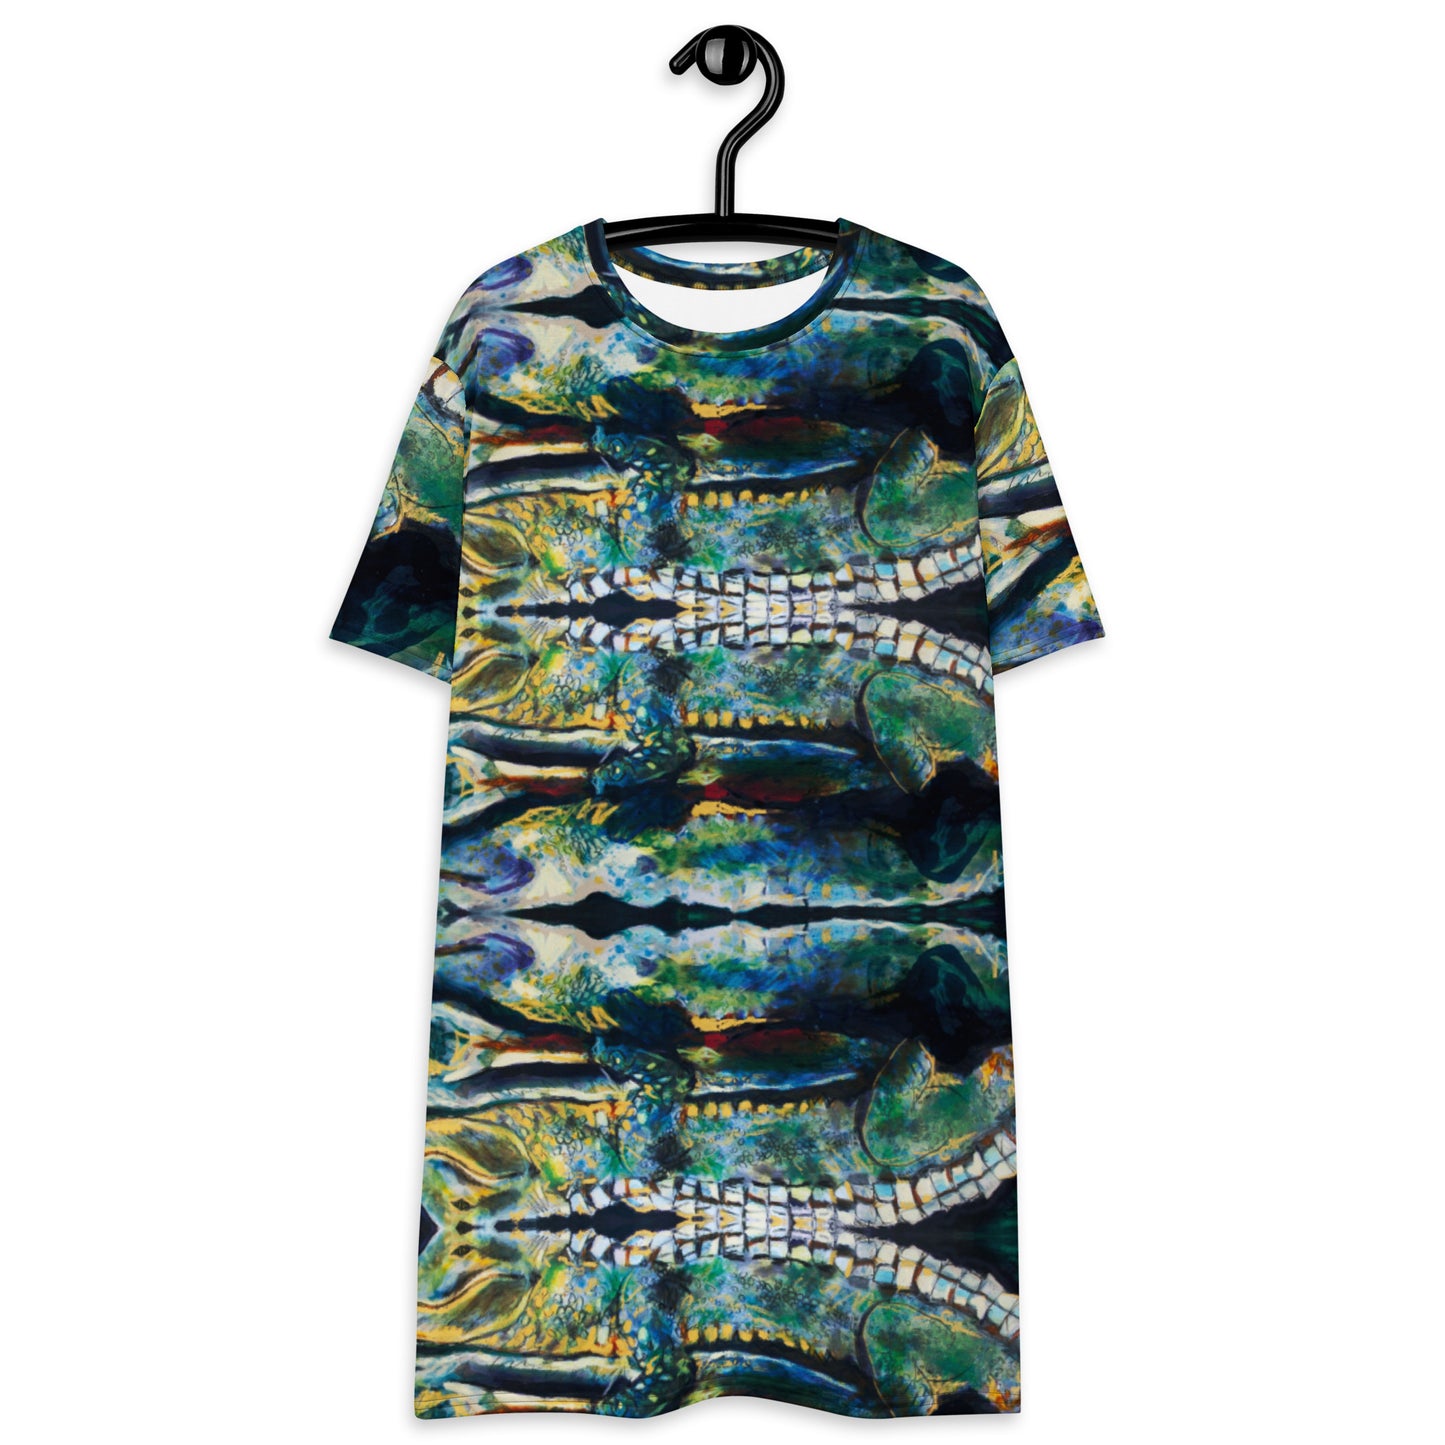 Psychedelic Gator T-shirt dress